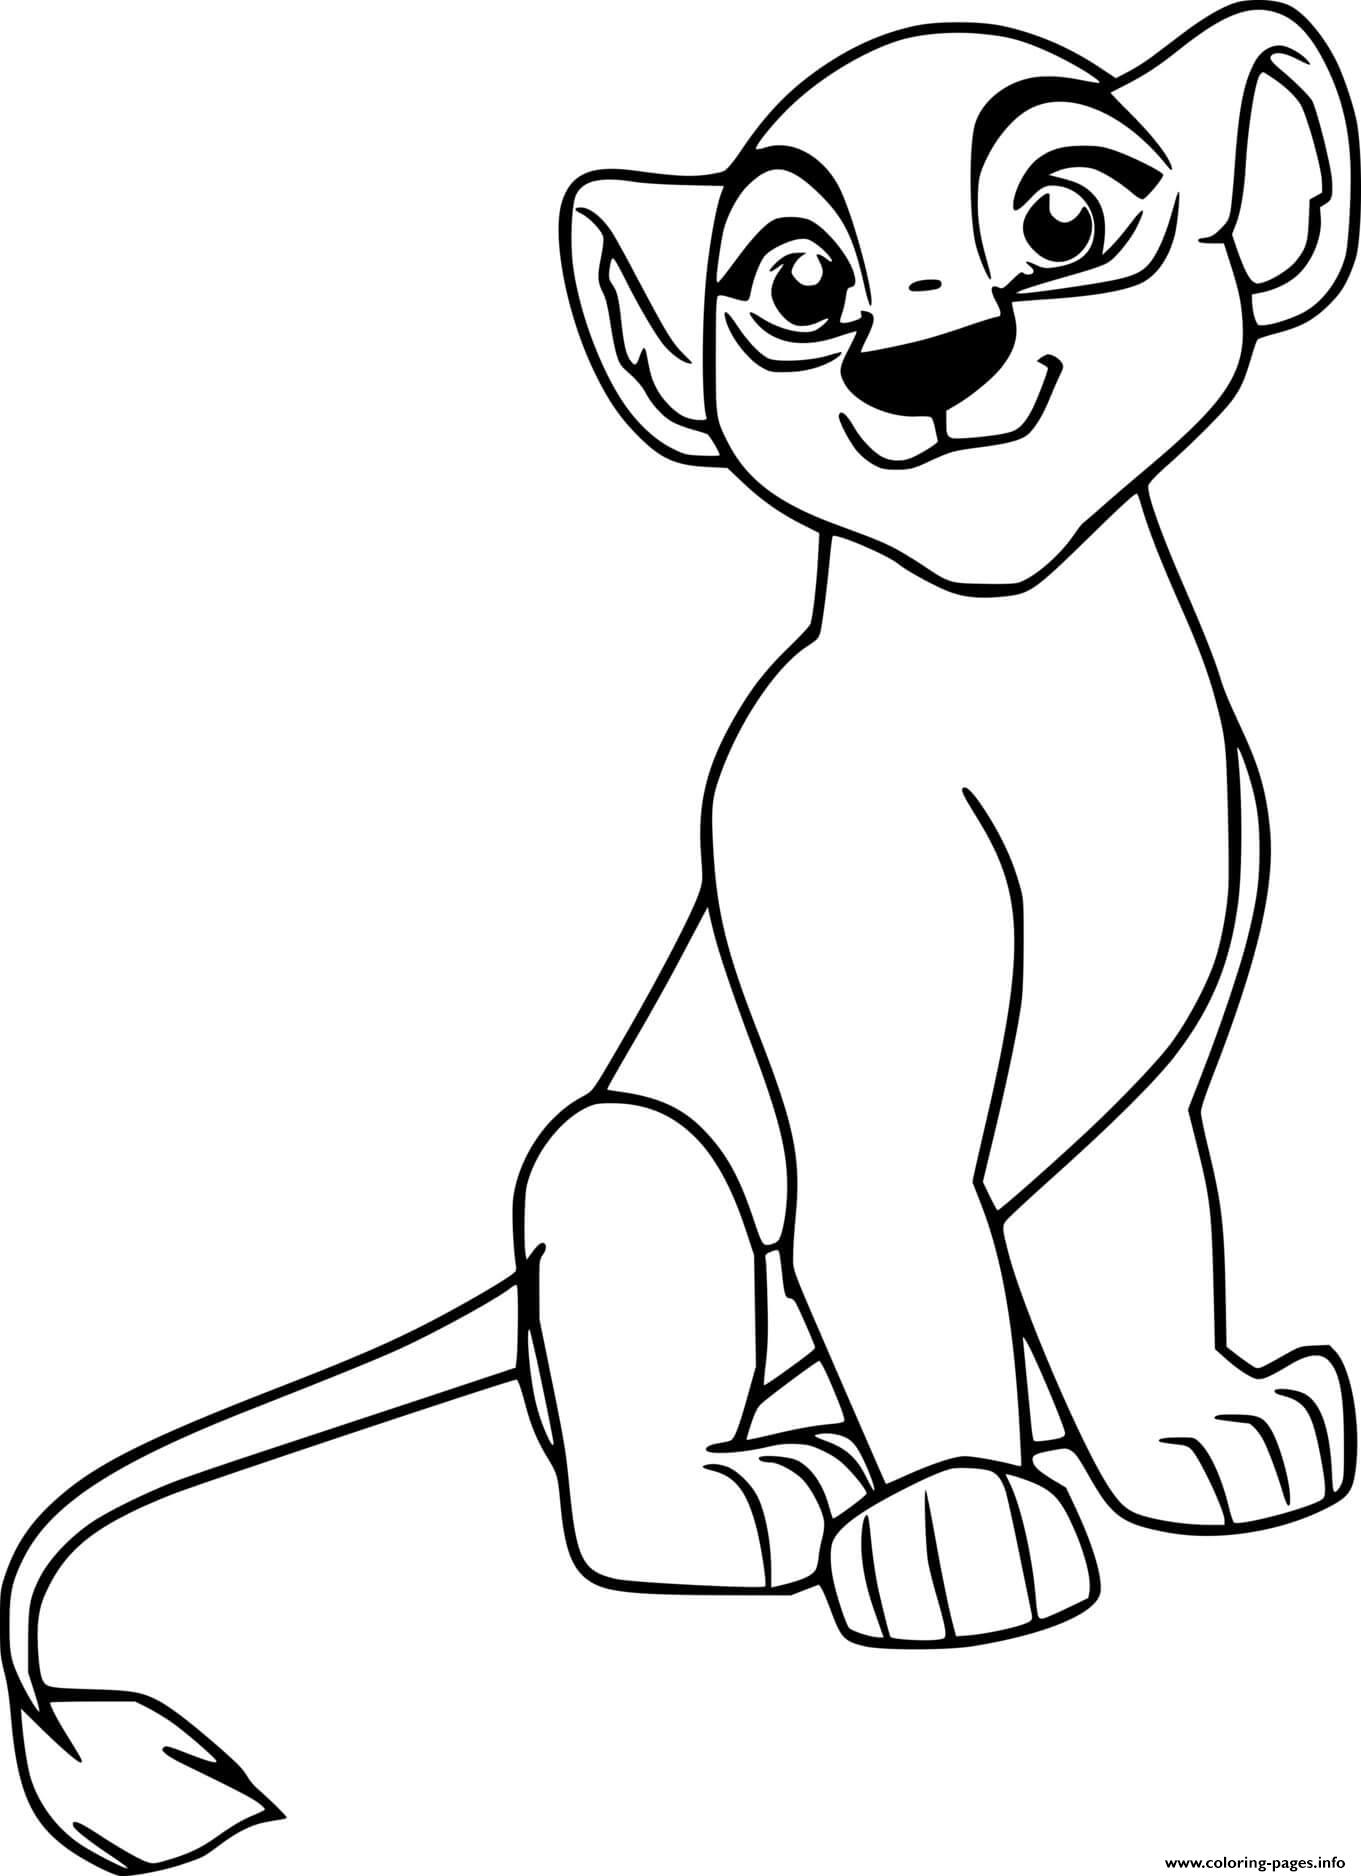 Kiara From Lion Guard coloring